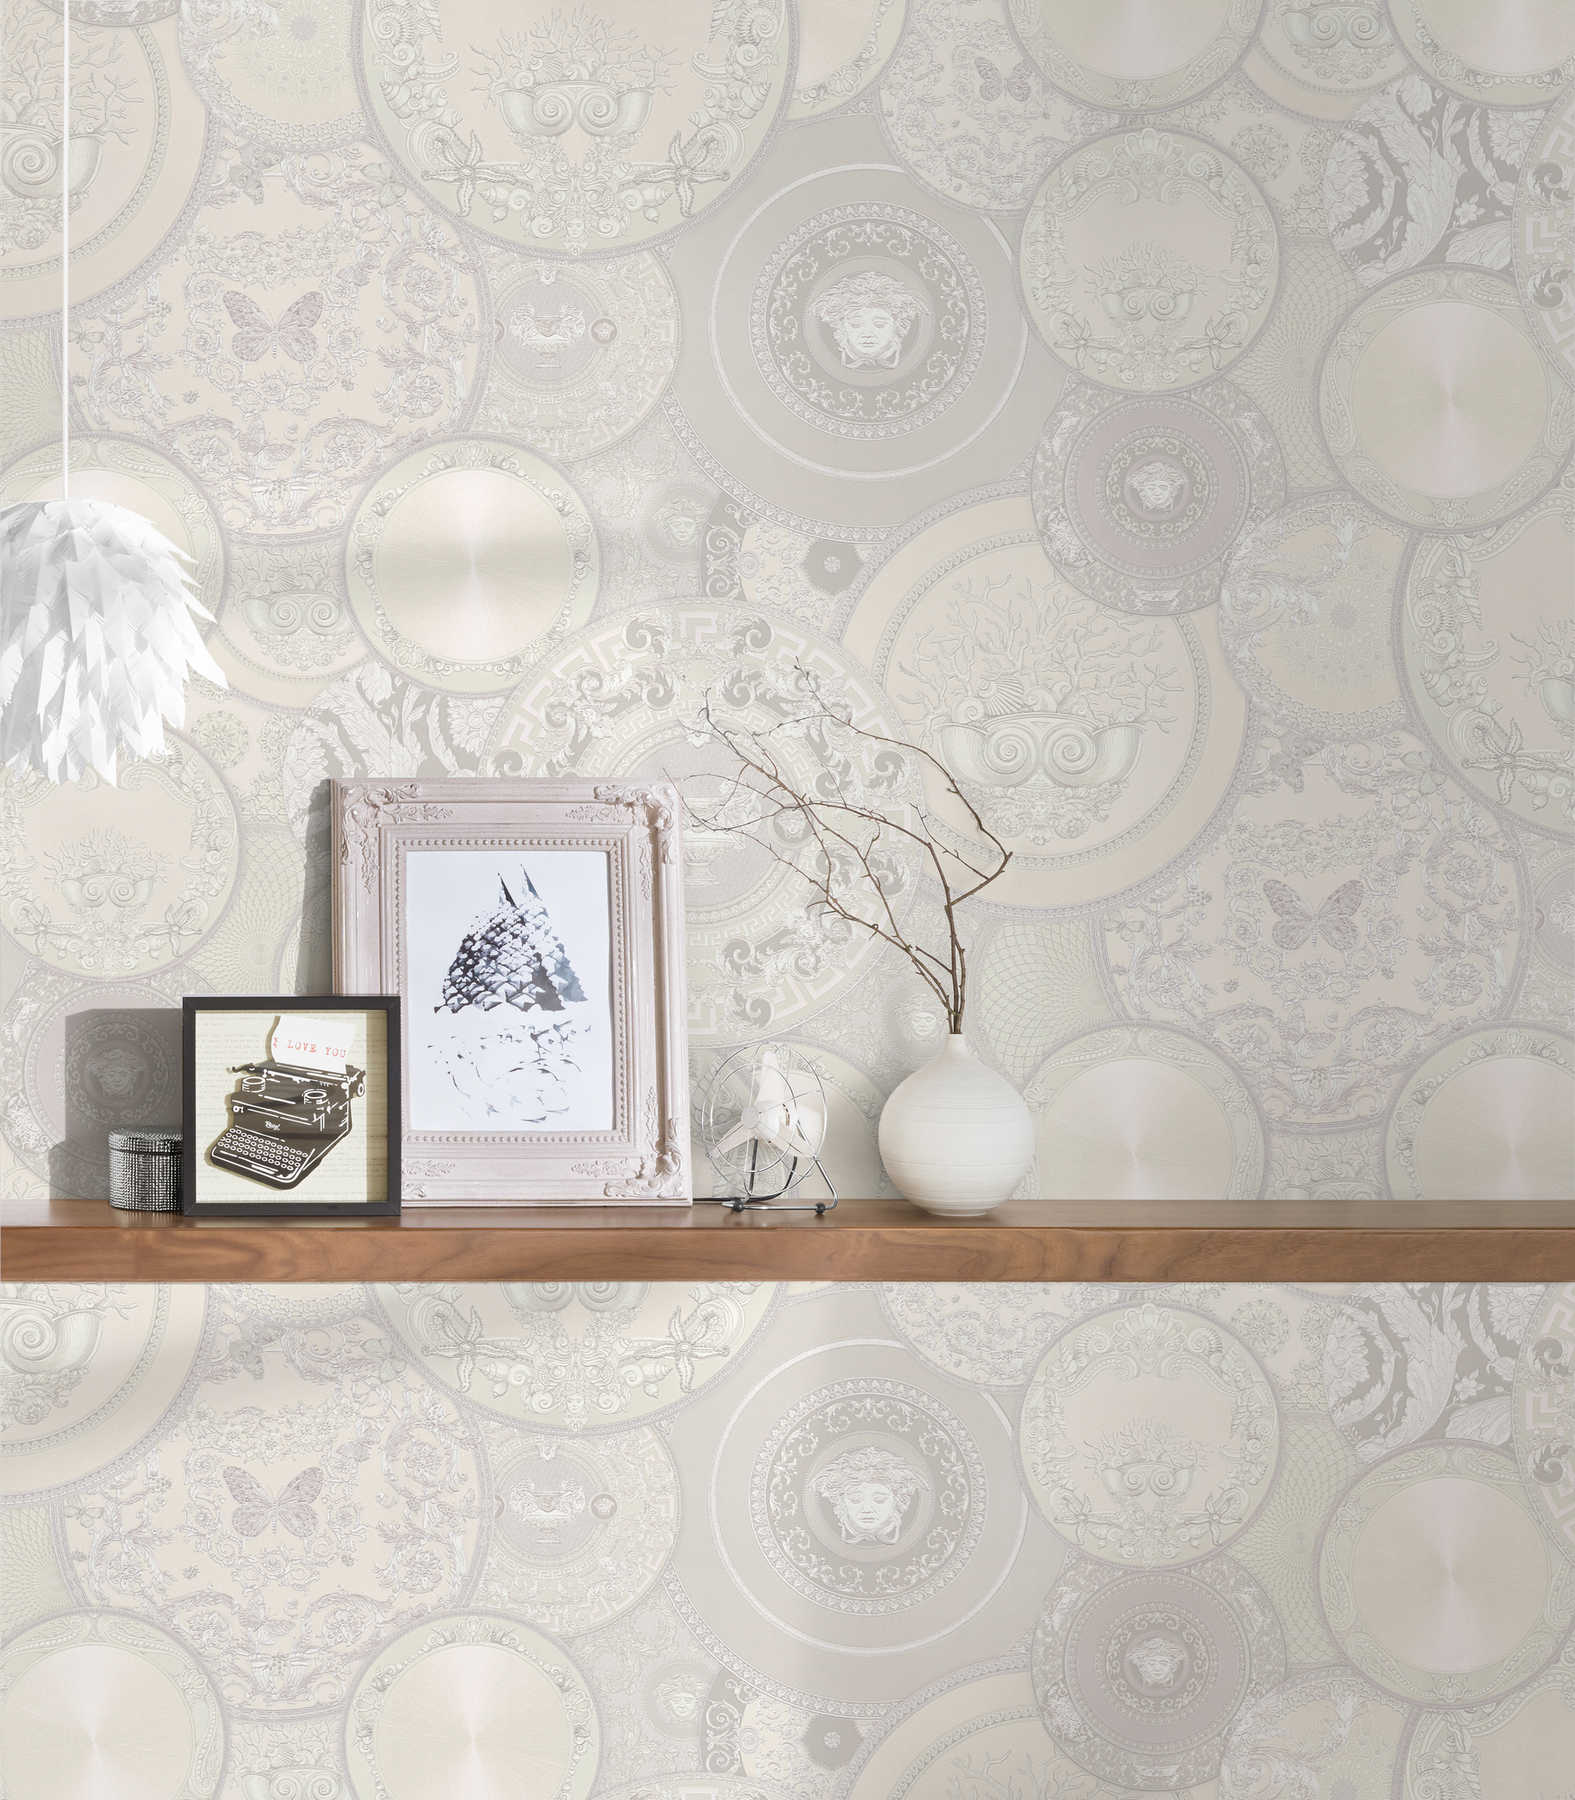             VERSACE non-woven wallpaper with gloss effect - metallic, white
        